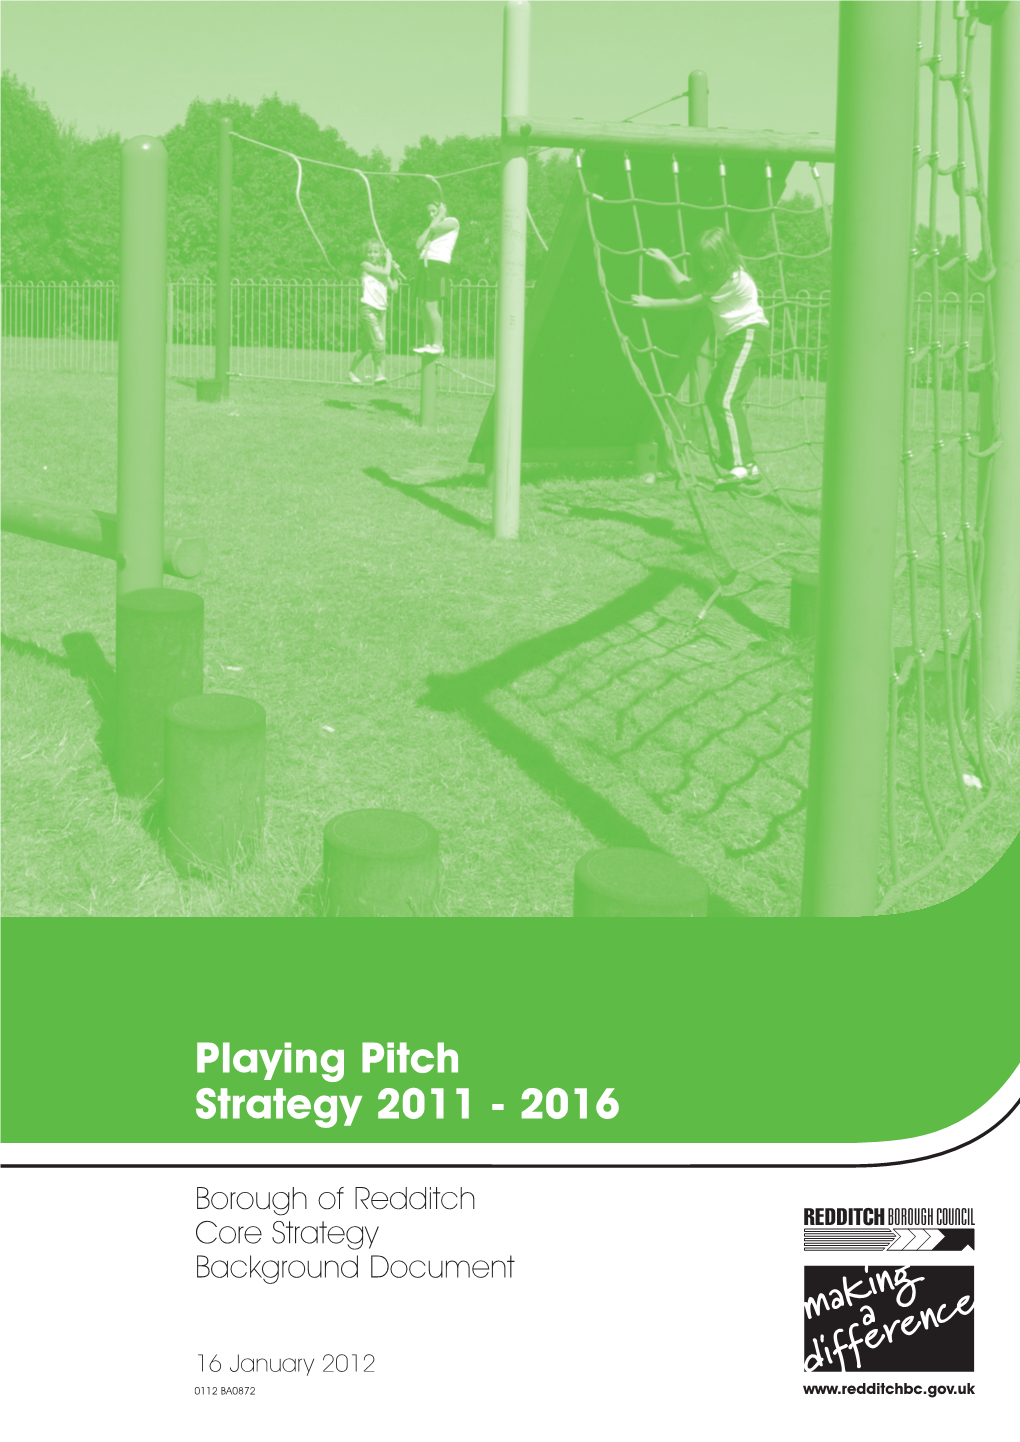 Playing Pitch Strategy 2011 - 2016